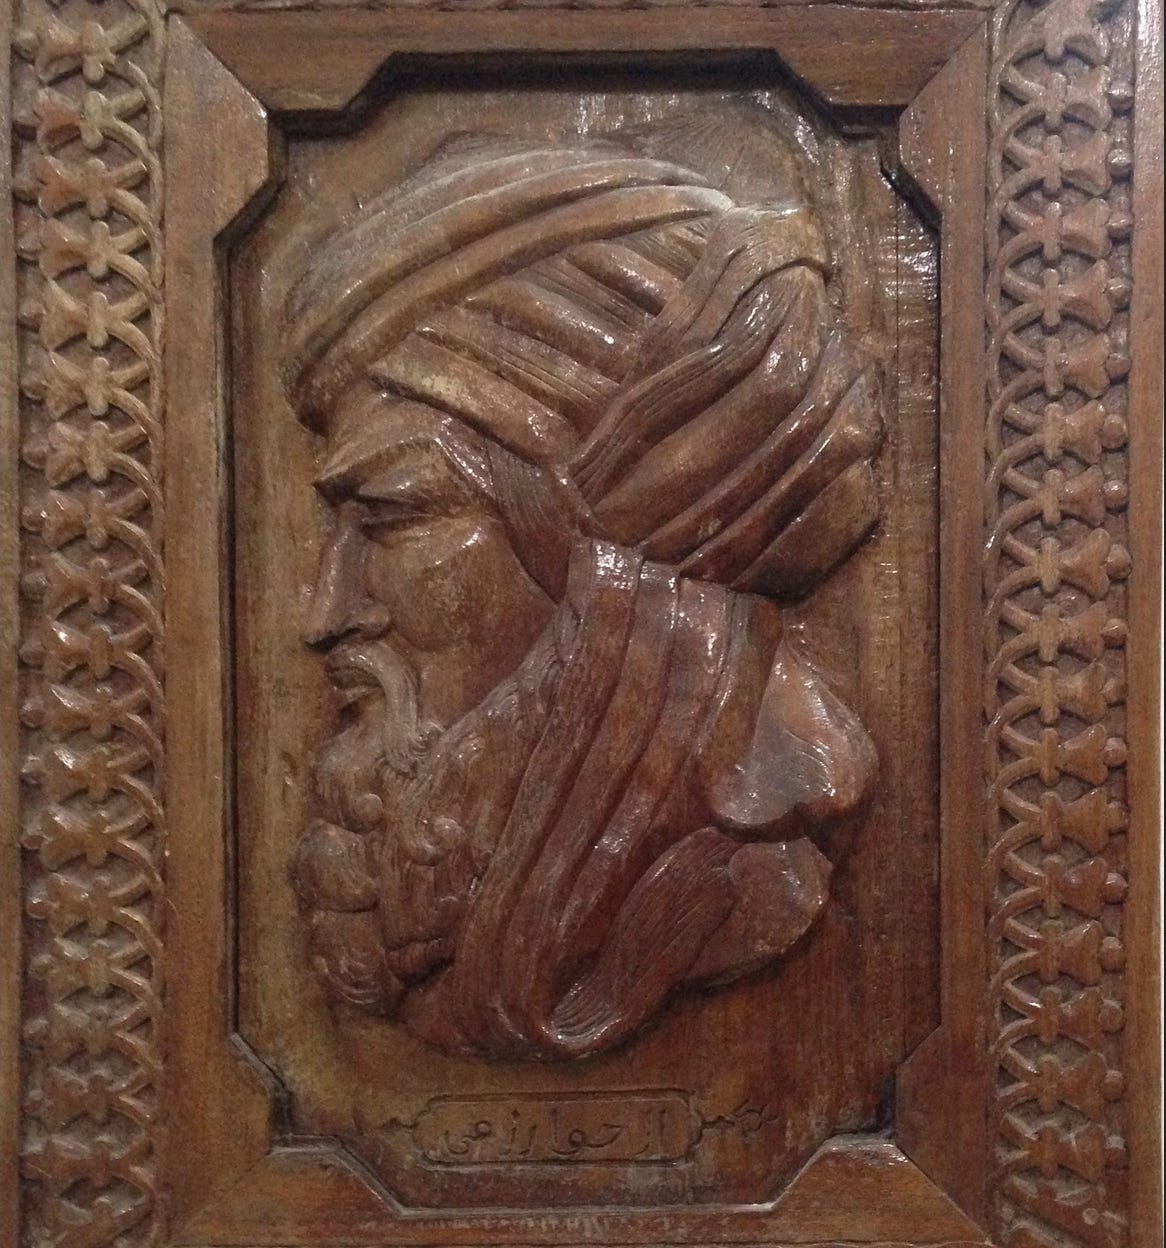 Wood engraving of Muhammad ibn Musa al-Khwarizmi